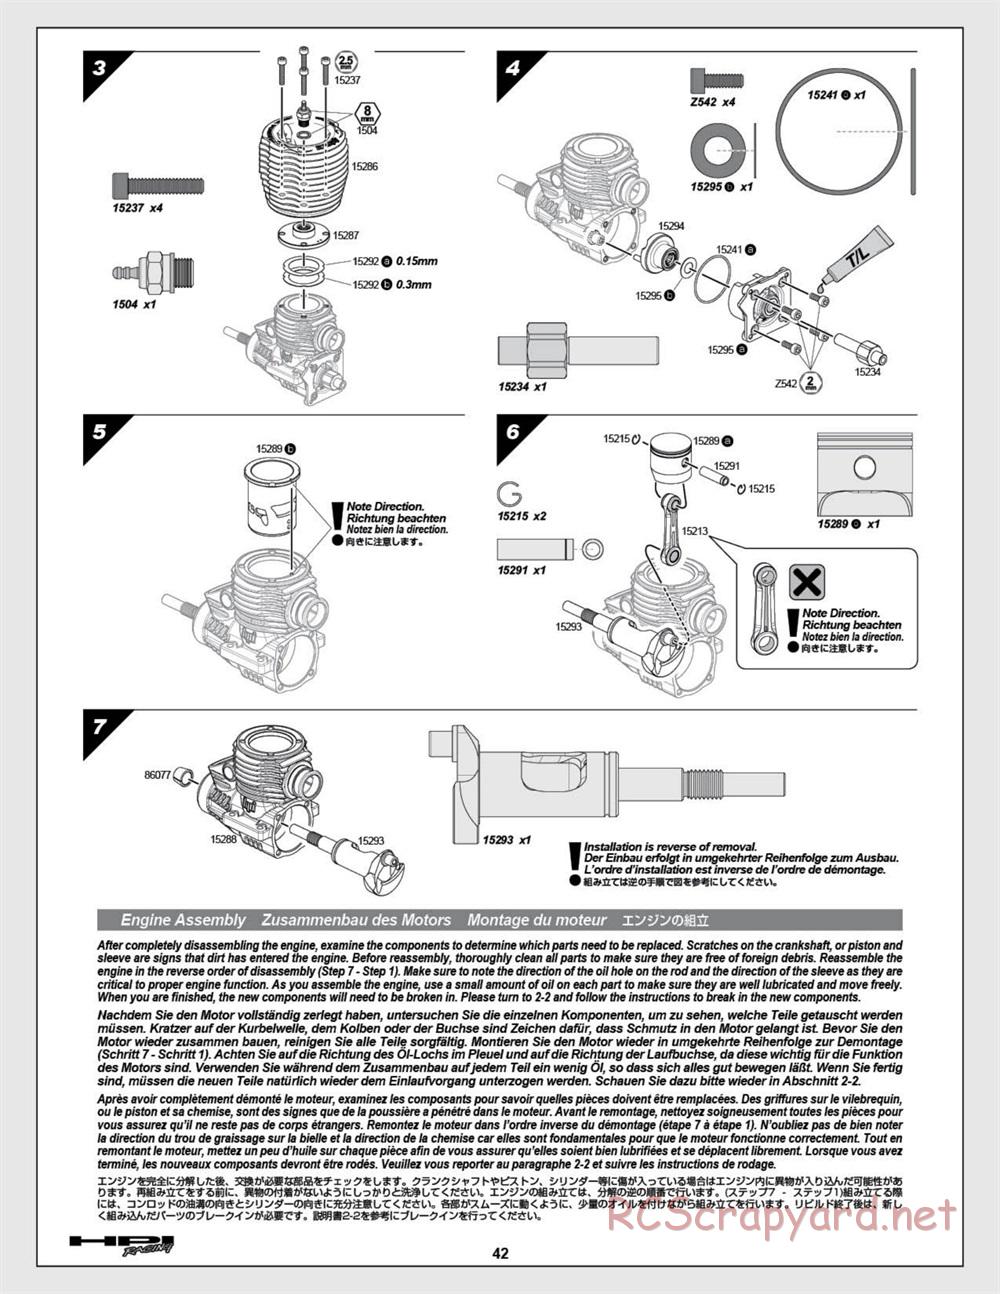 HPI - Savage XL 5.9 - Manual - Page 42